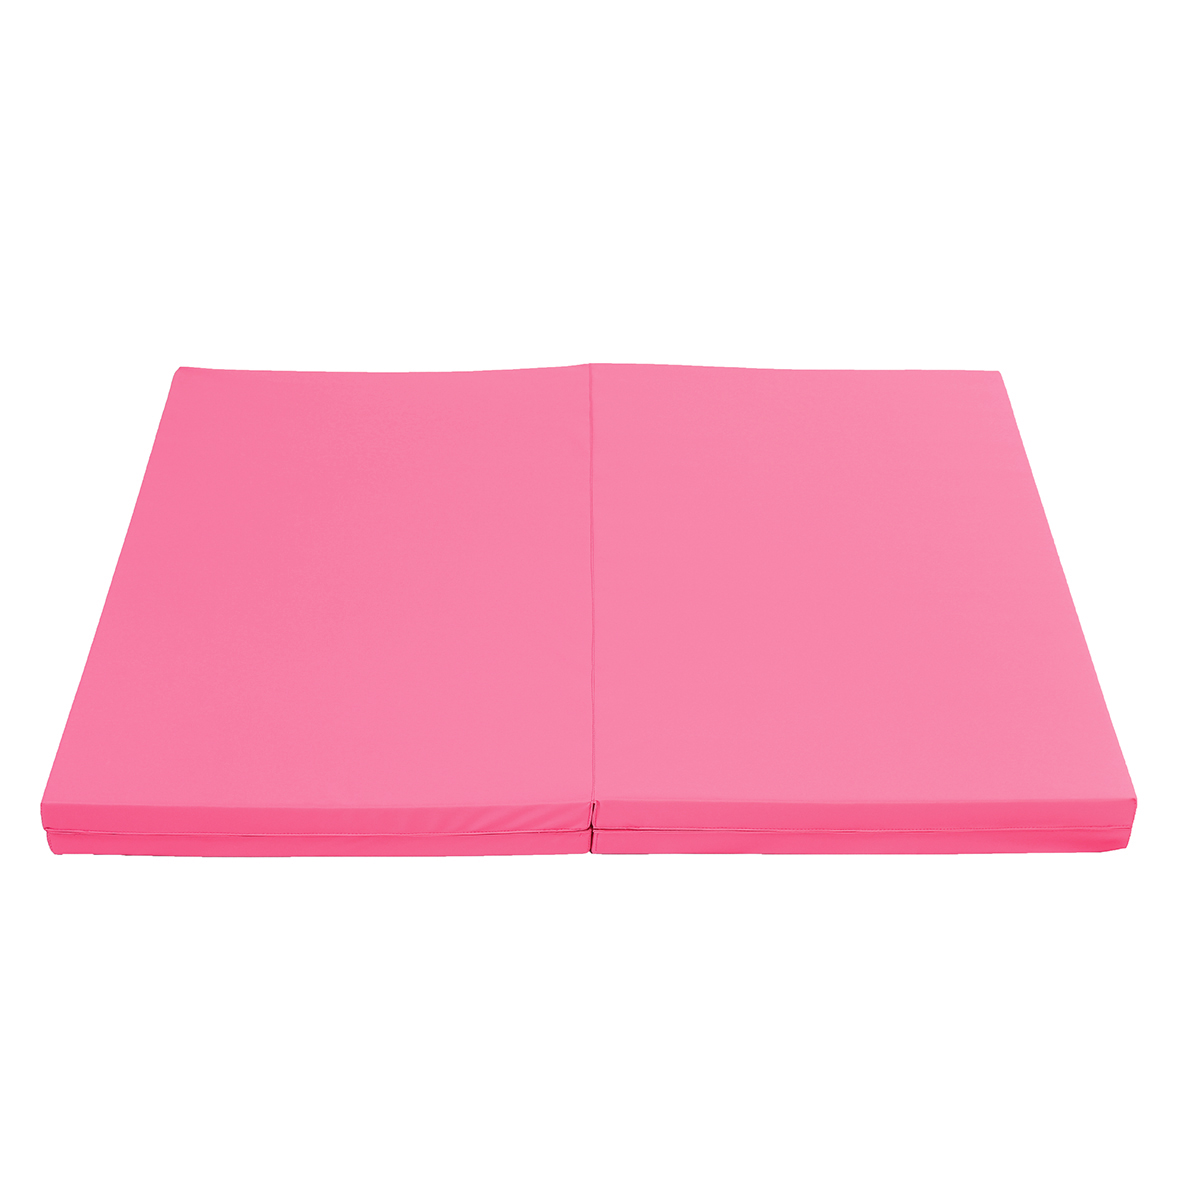 118x47x196inch-4-Folding-Super-Large-Gymnastics-Mat-Yoga-Gym-Exercise-Pad-Pink-1246274-7